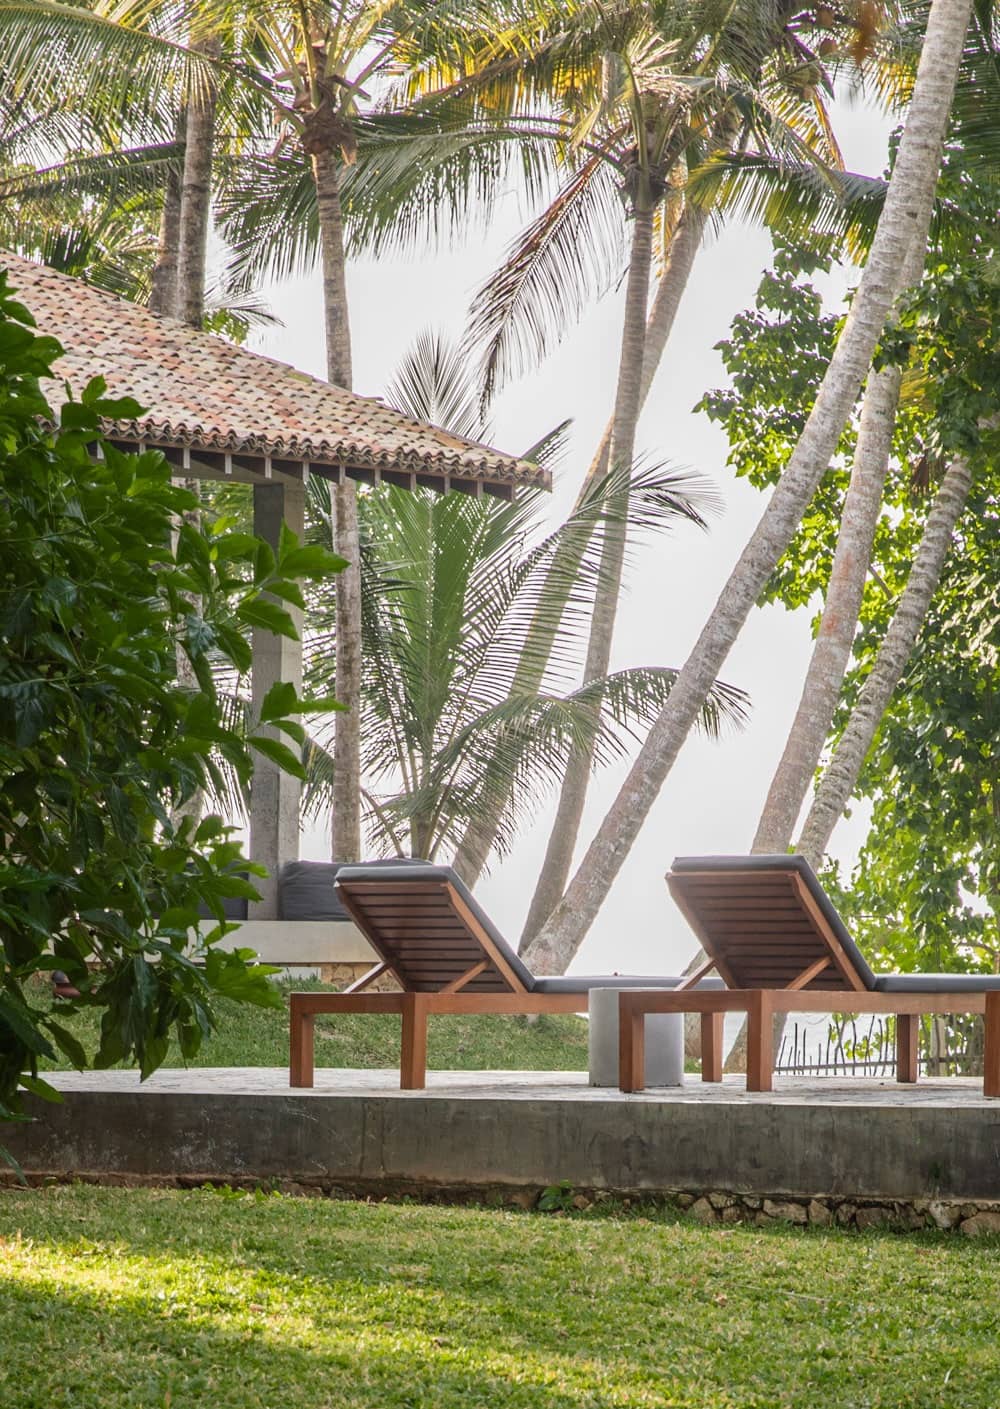 Resort Villa in Sri Lanka by Norm Architects & AIM Architecture